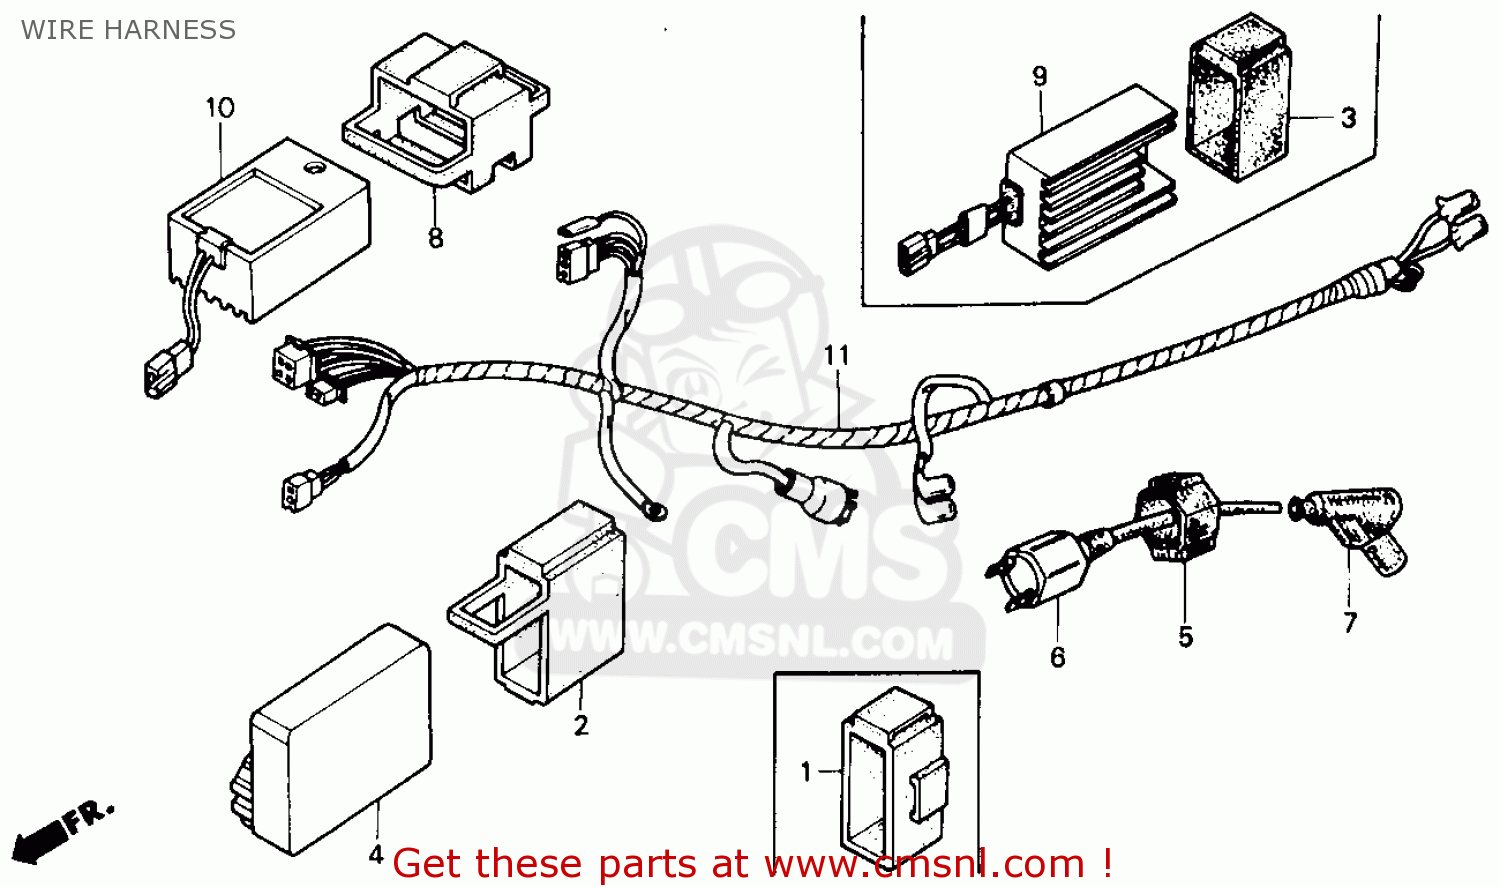 1984 honda trx 200 wiring diagram